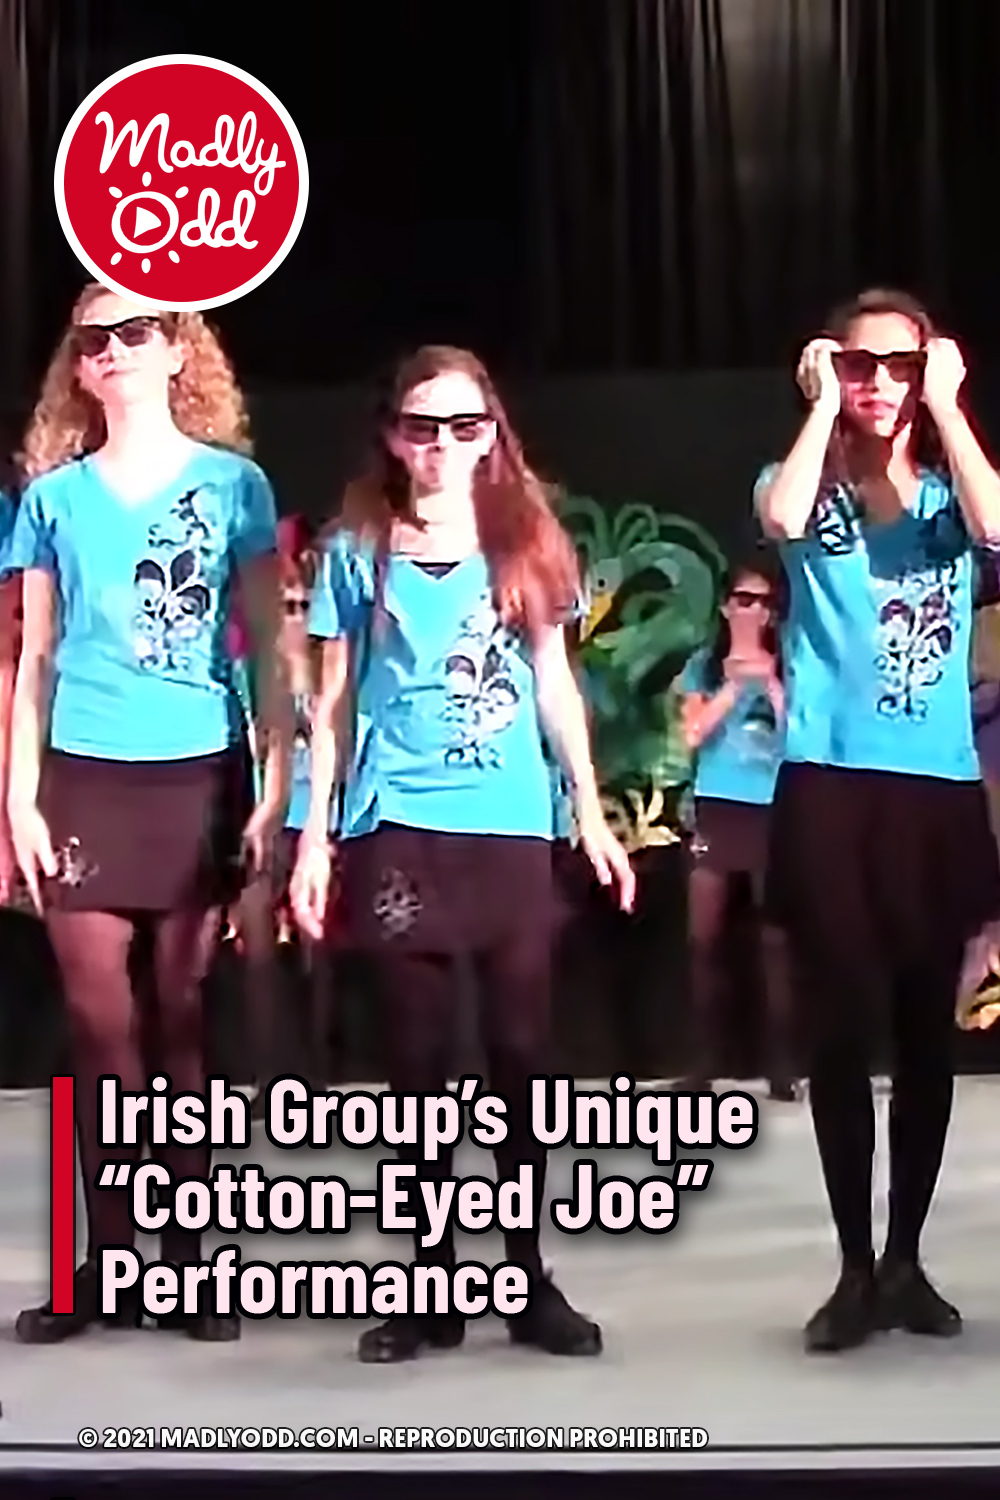 Irish Group’s Unique “Cotton-Eyed Joe” Performance